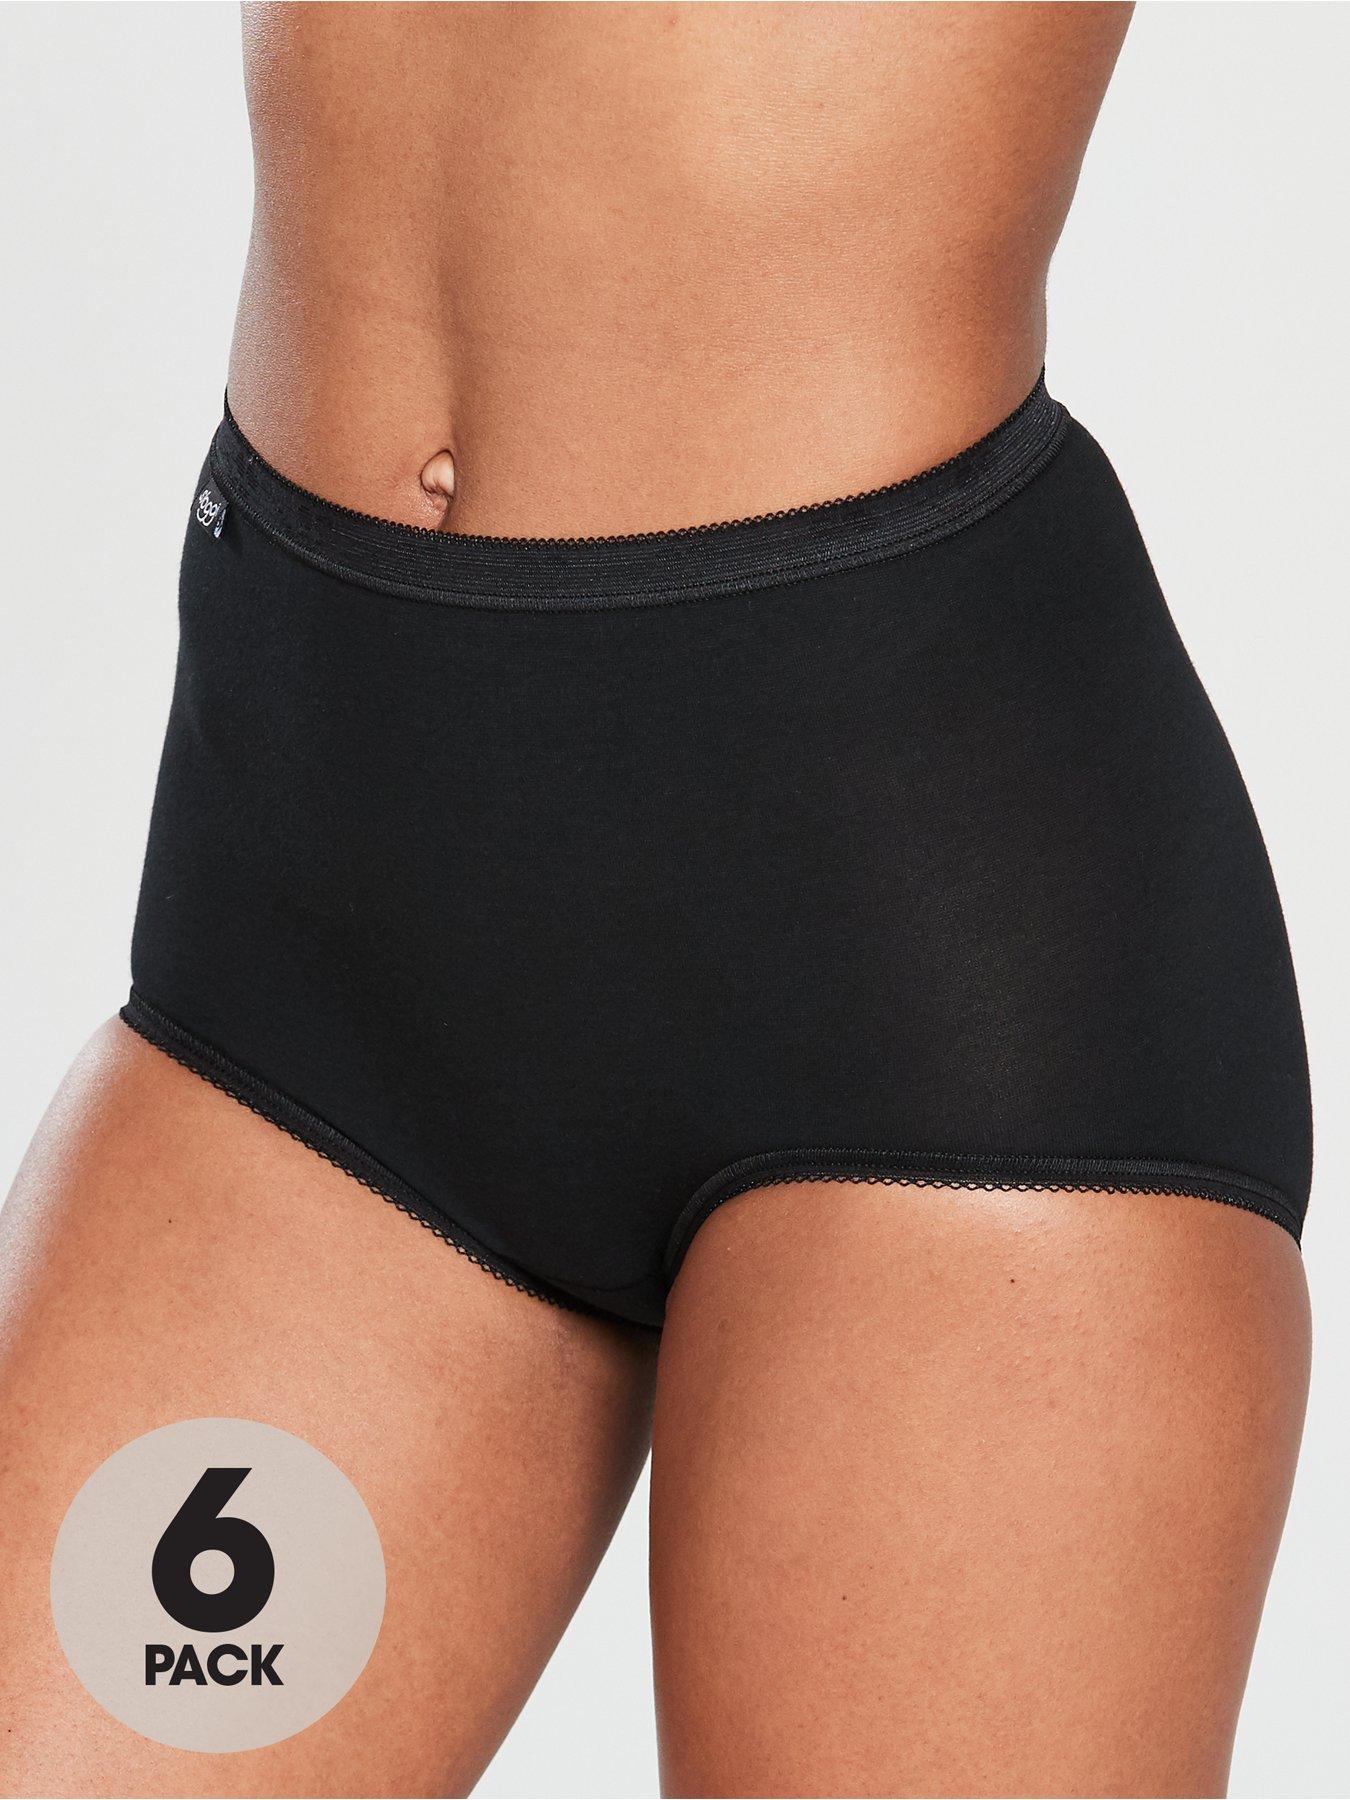 Yacht & Smith 9 Pack of Womens Cotton Underwear Black Panty Briefs